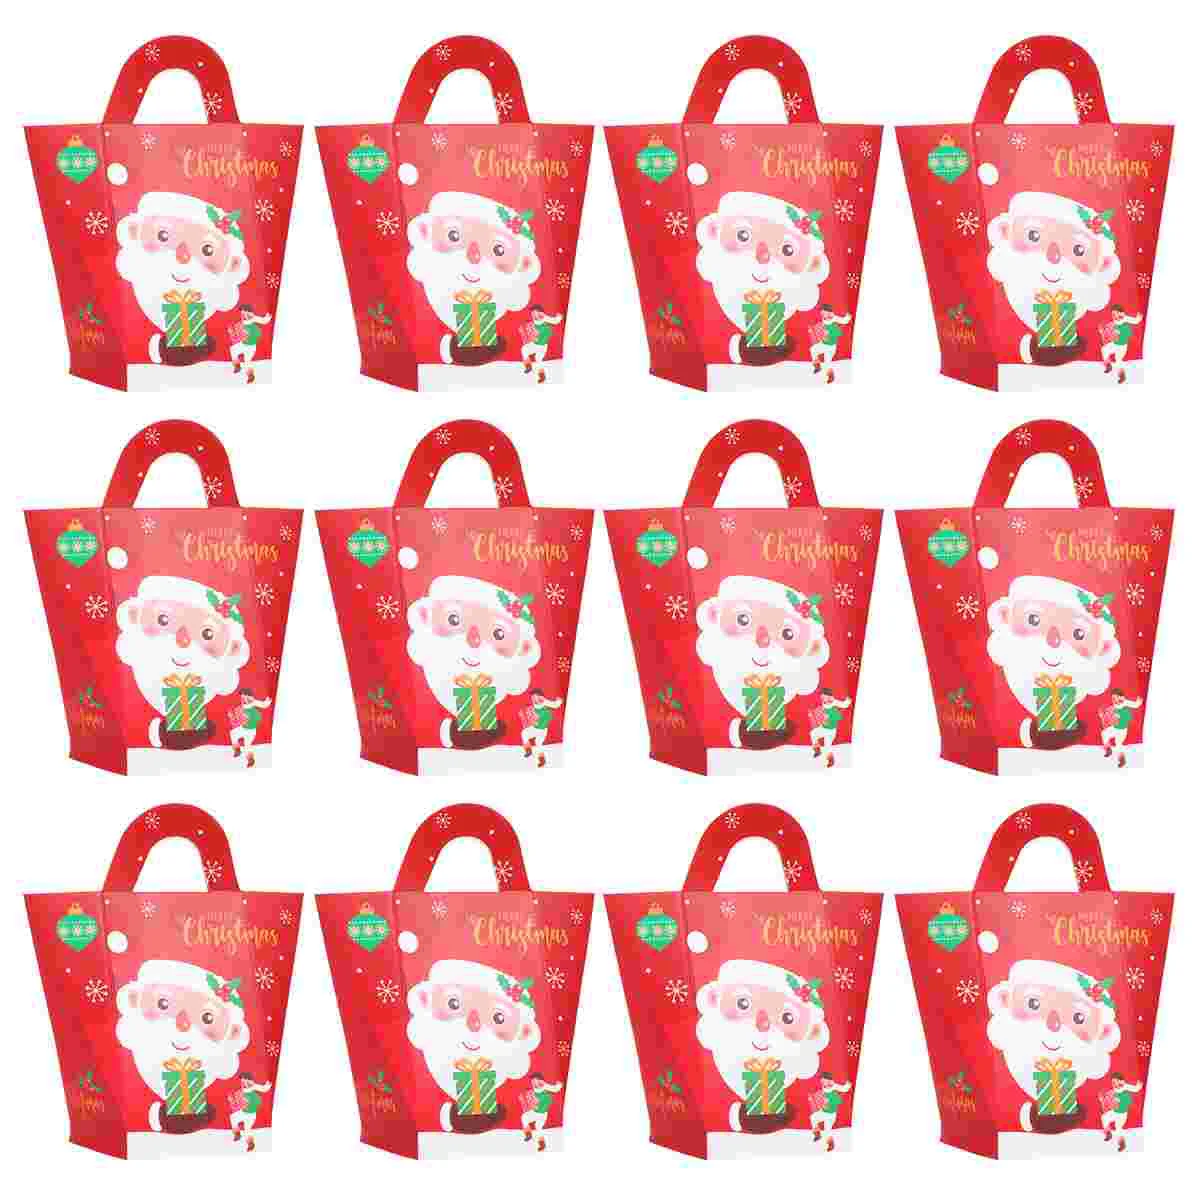 

12pcs Xmas Candy Boxes Christmas Paper Gift Bag Christmas Paper Sandwich Bags Xmas Party Favor Paper Treat Bags